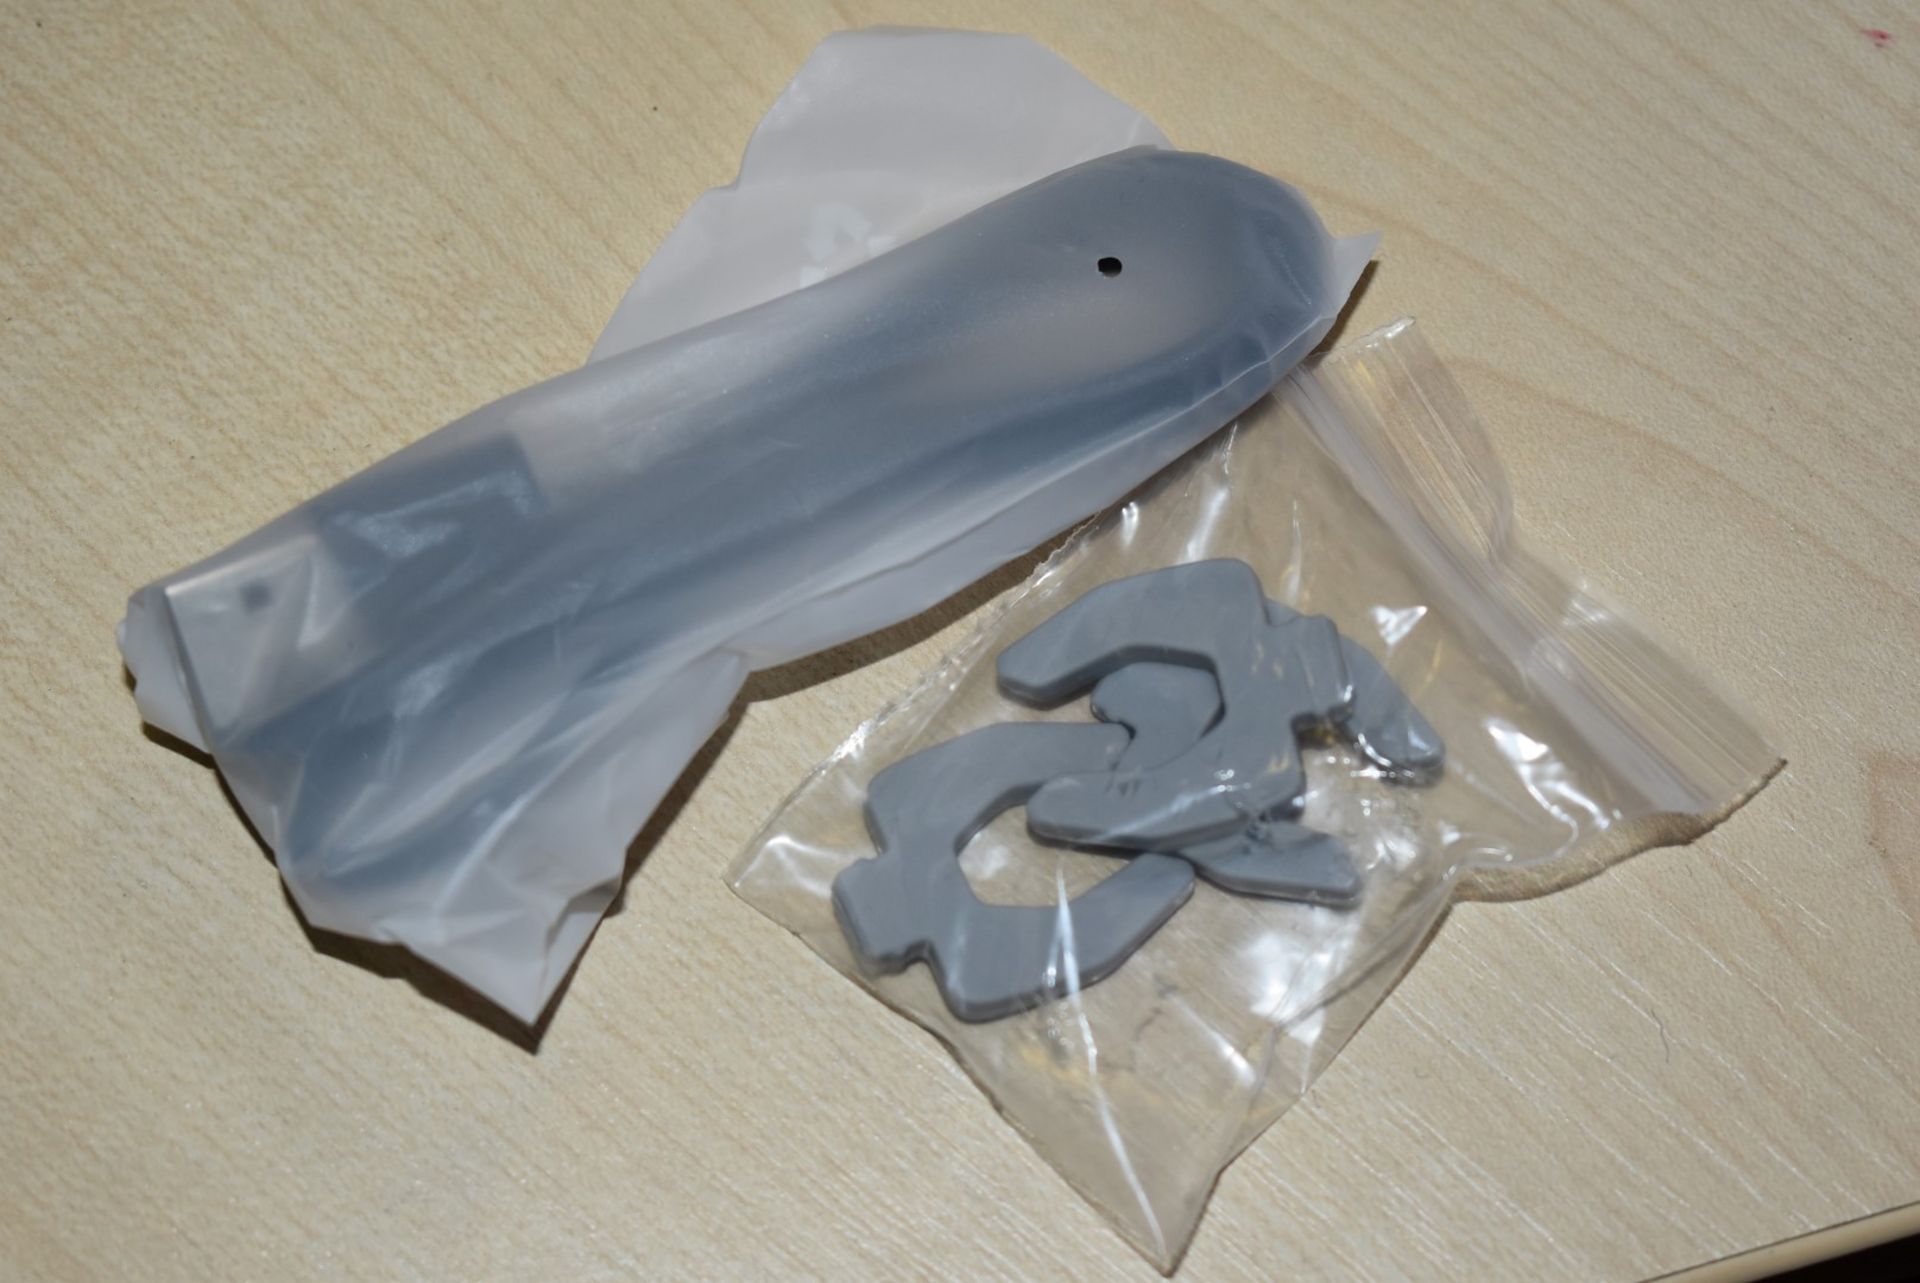 4 x Homedics UV Clean Portable Sanitiser Bags - Kills Upto 99.9% of Bacteria & Viruses in Just 60 - Image 6 of 19